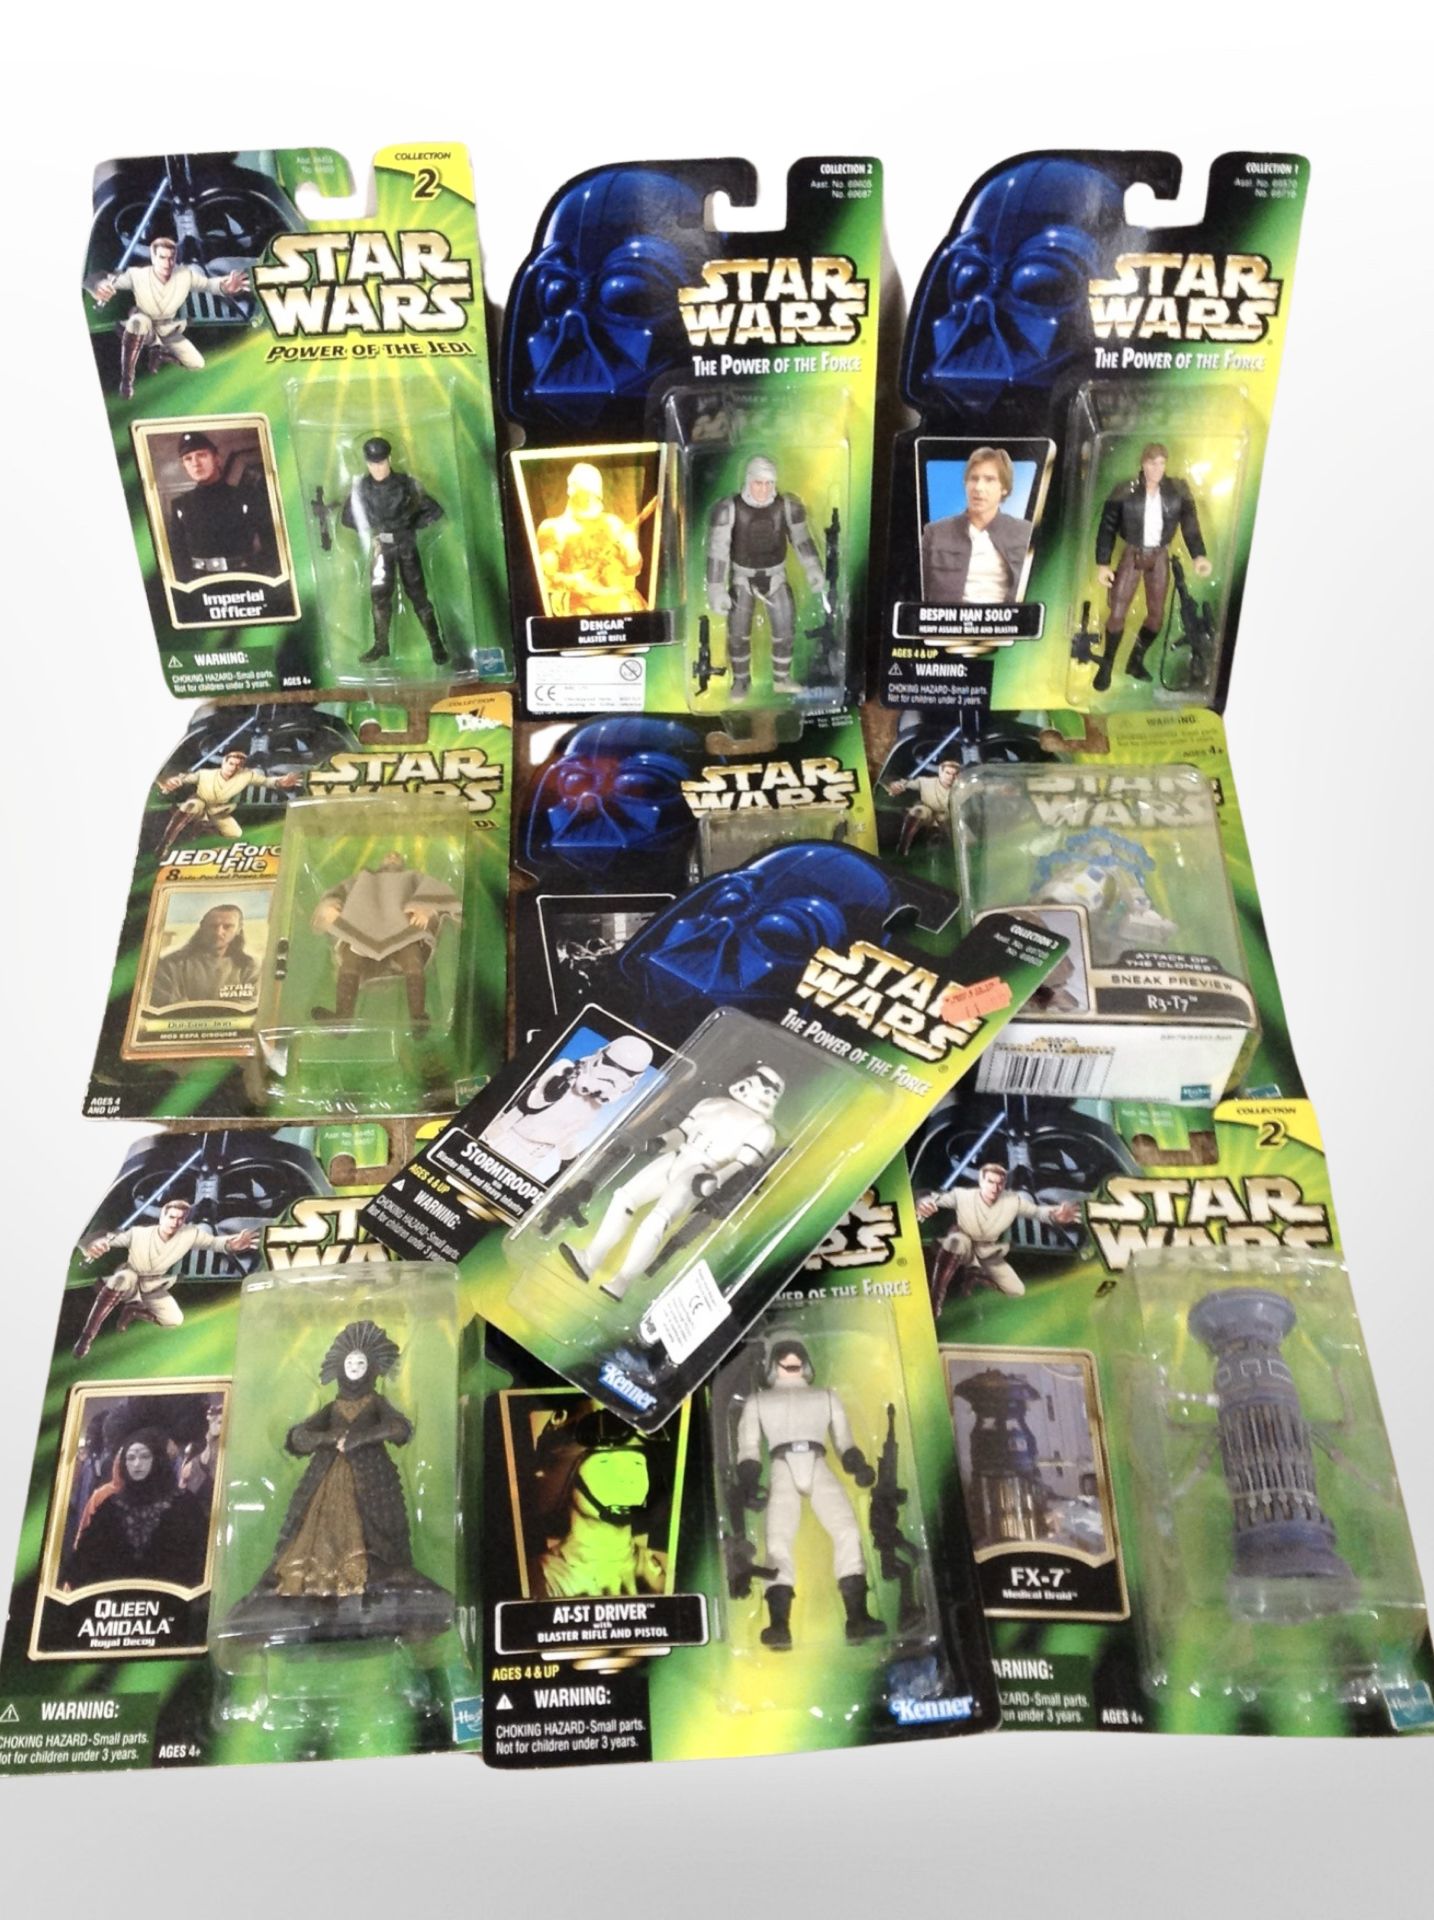 10 Hasbro Star Wars figures, boxed.